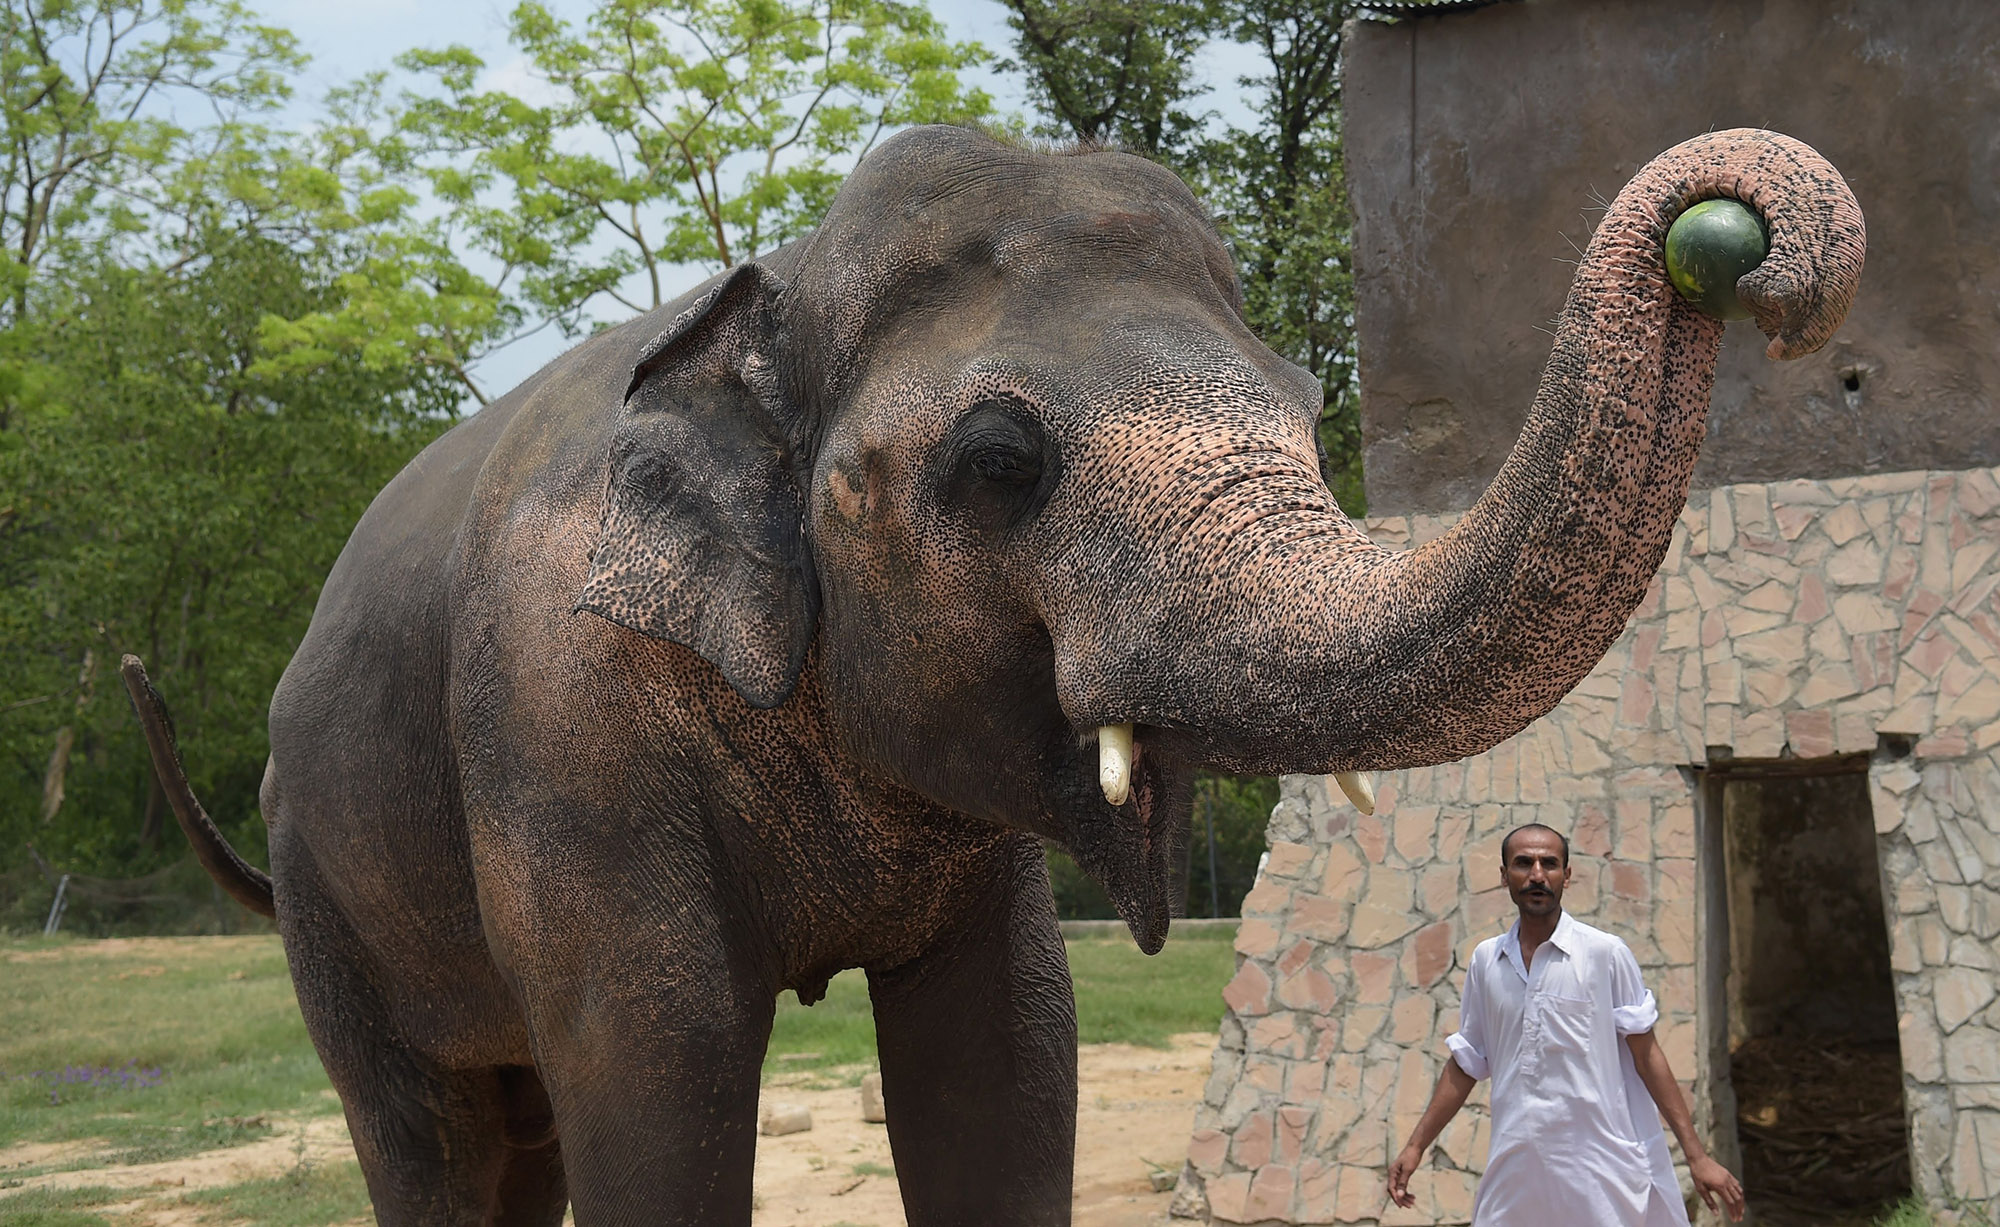 Kaavan being fed at the Marghazar Zoo in Islamabad.